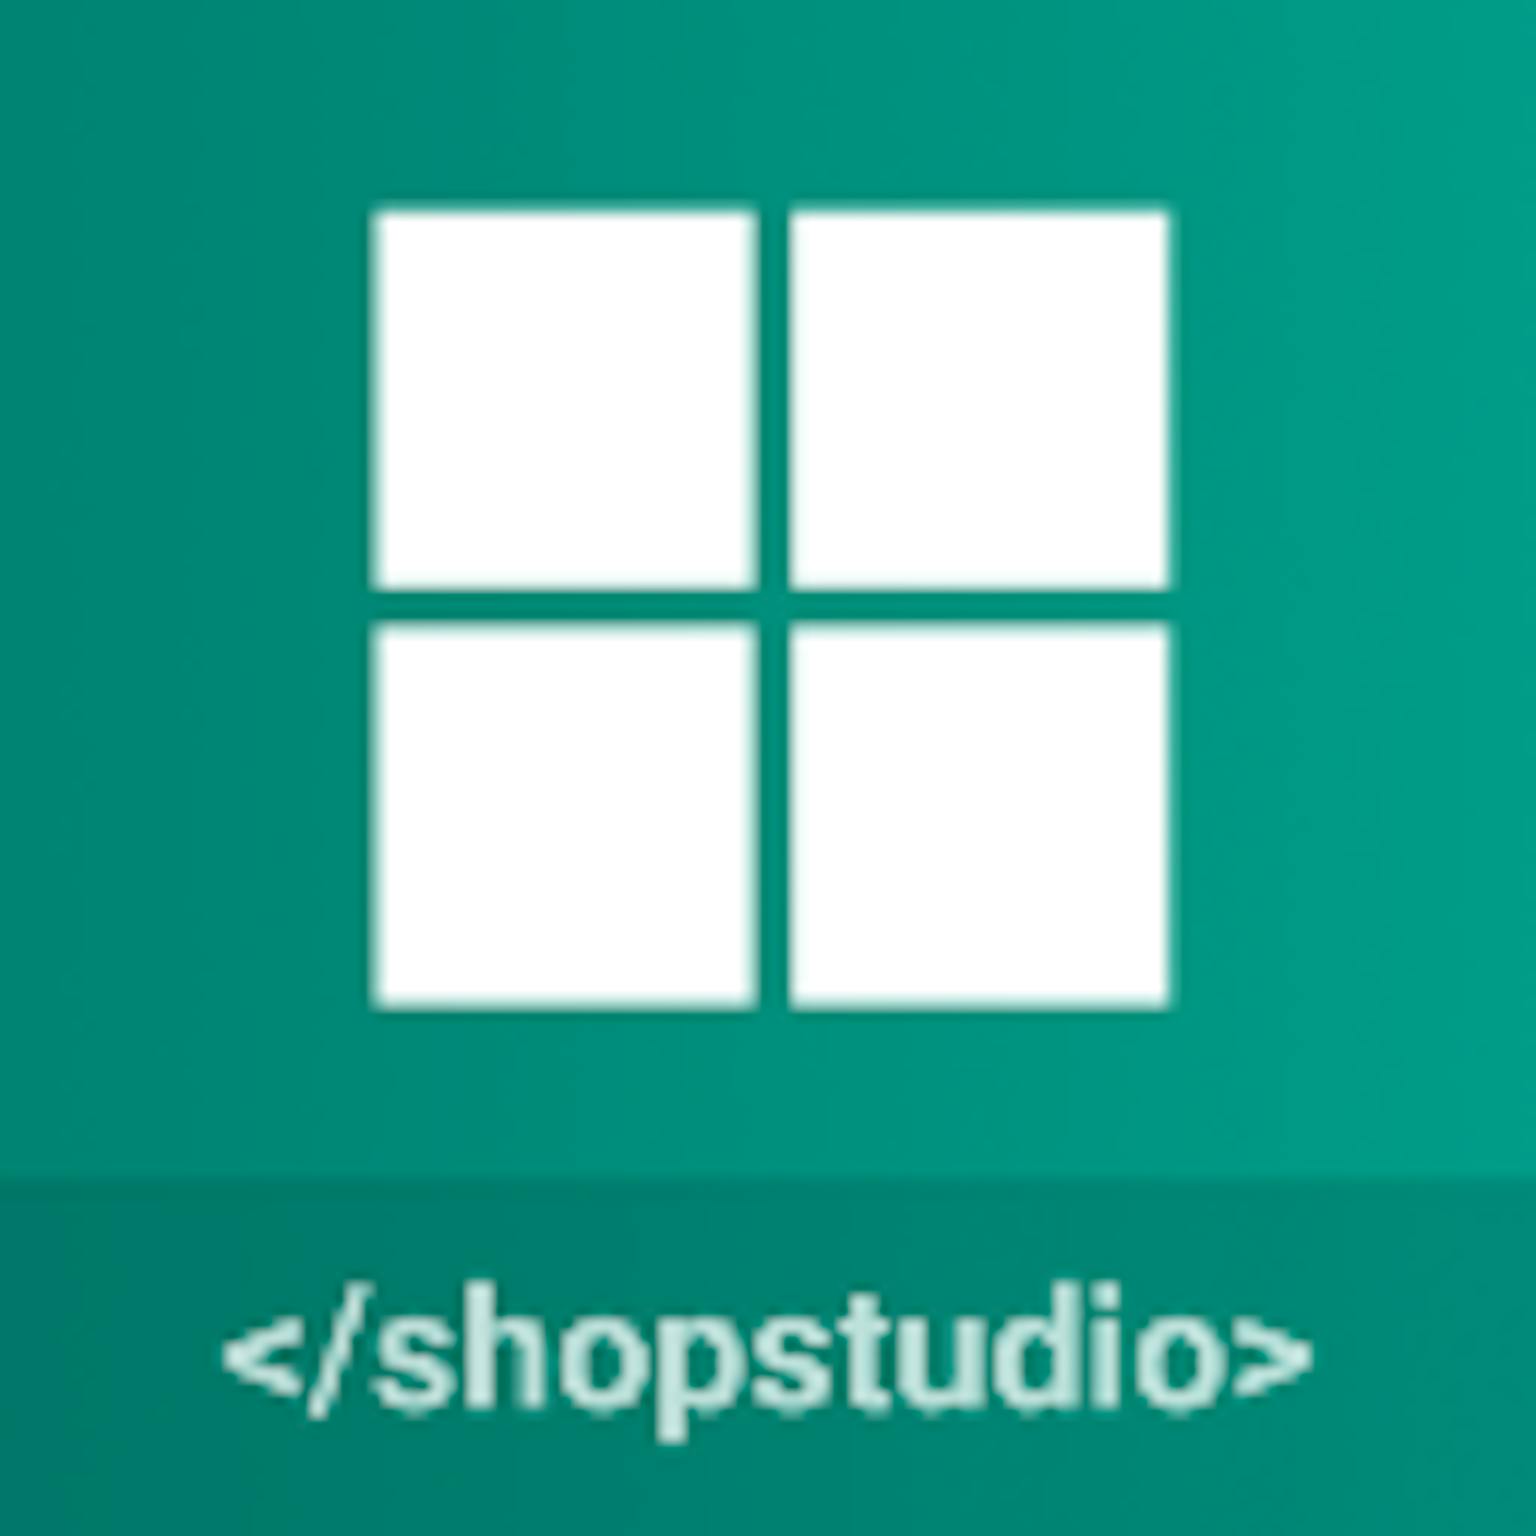 Shopware Erweiterung Icon: Microsoft Advertising`